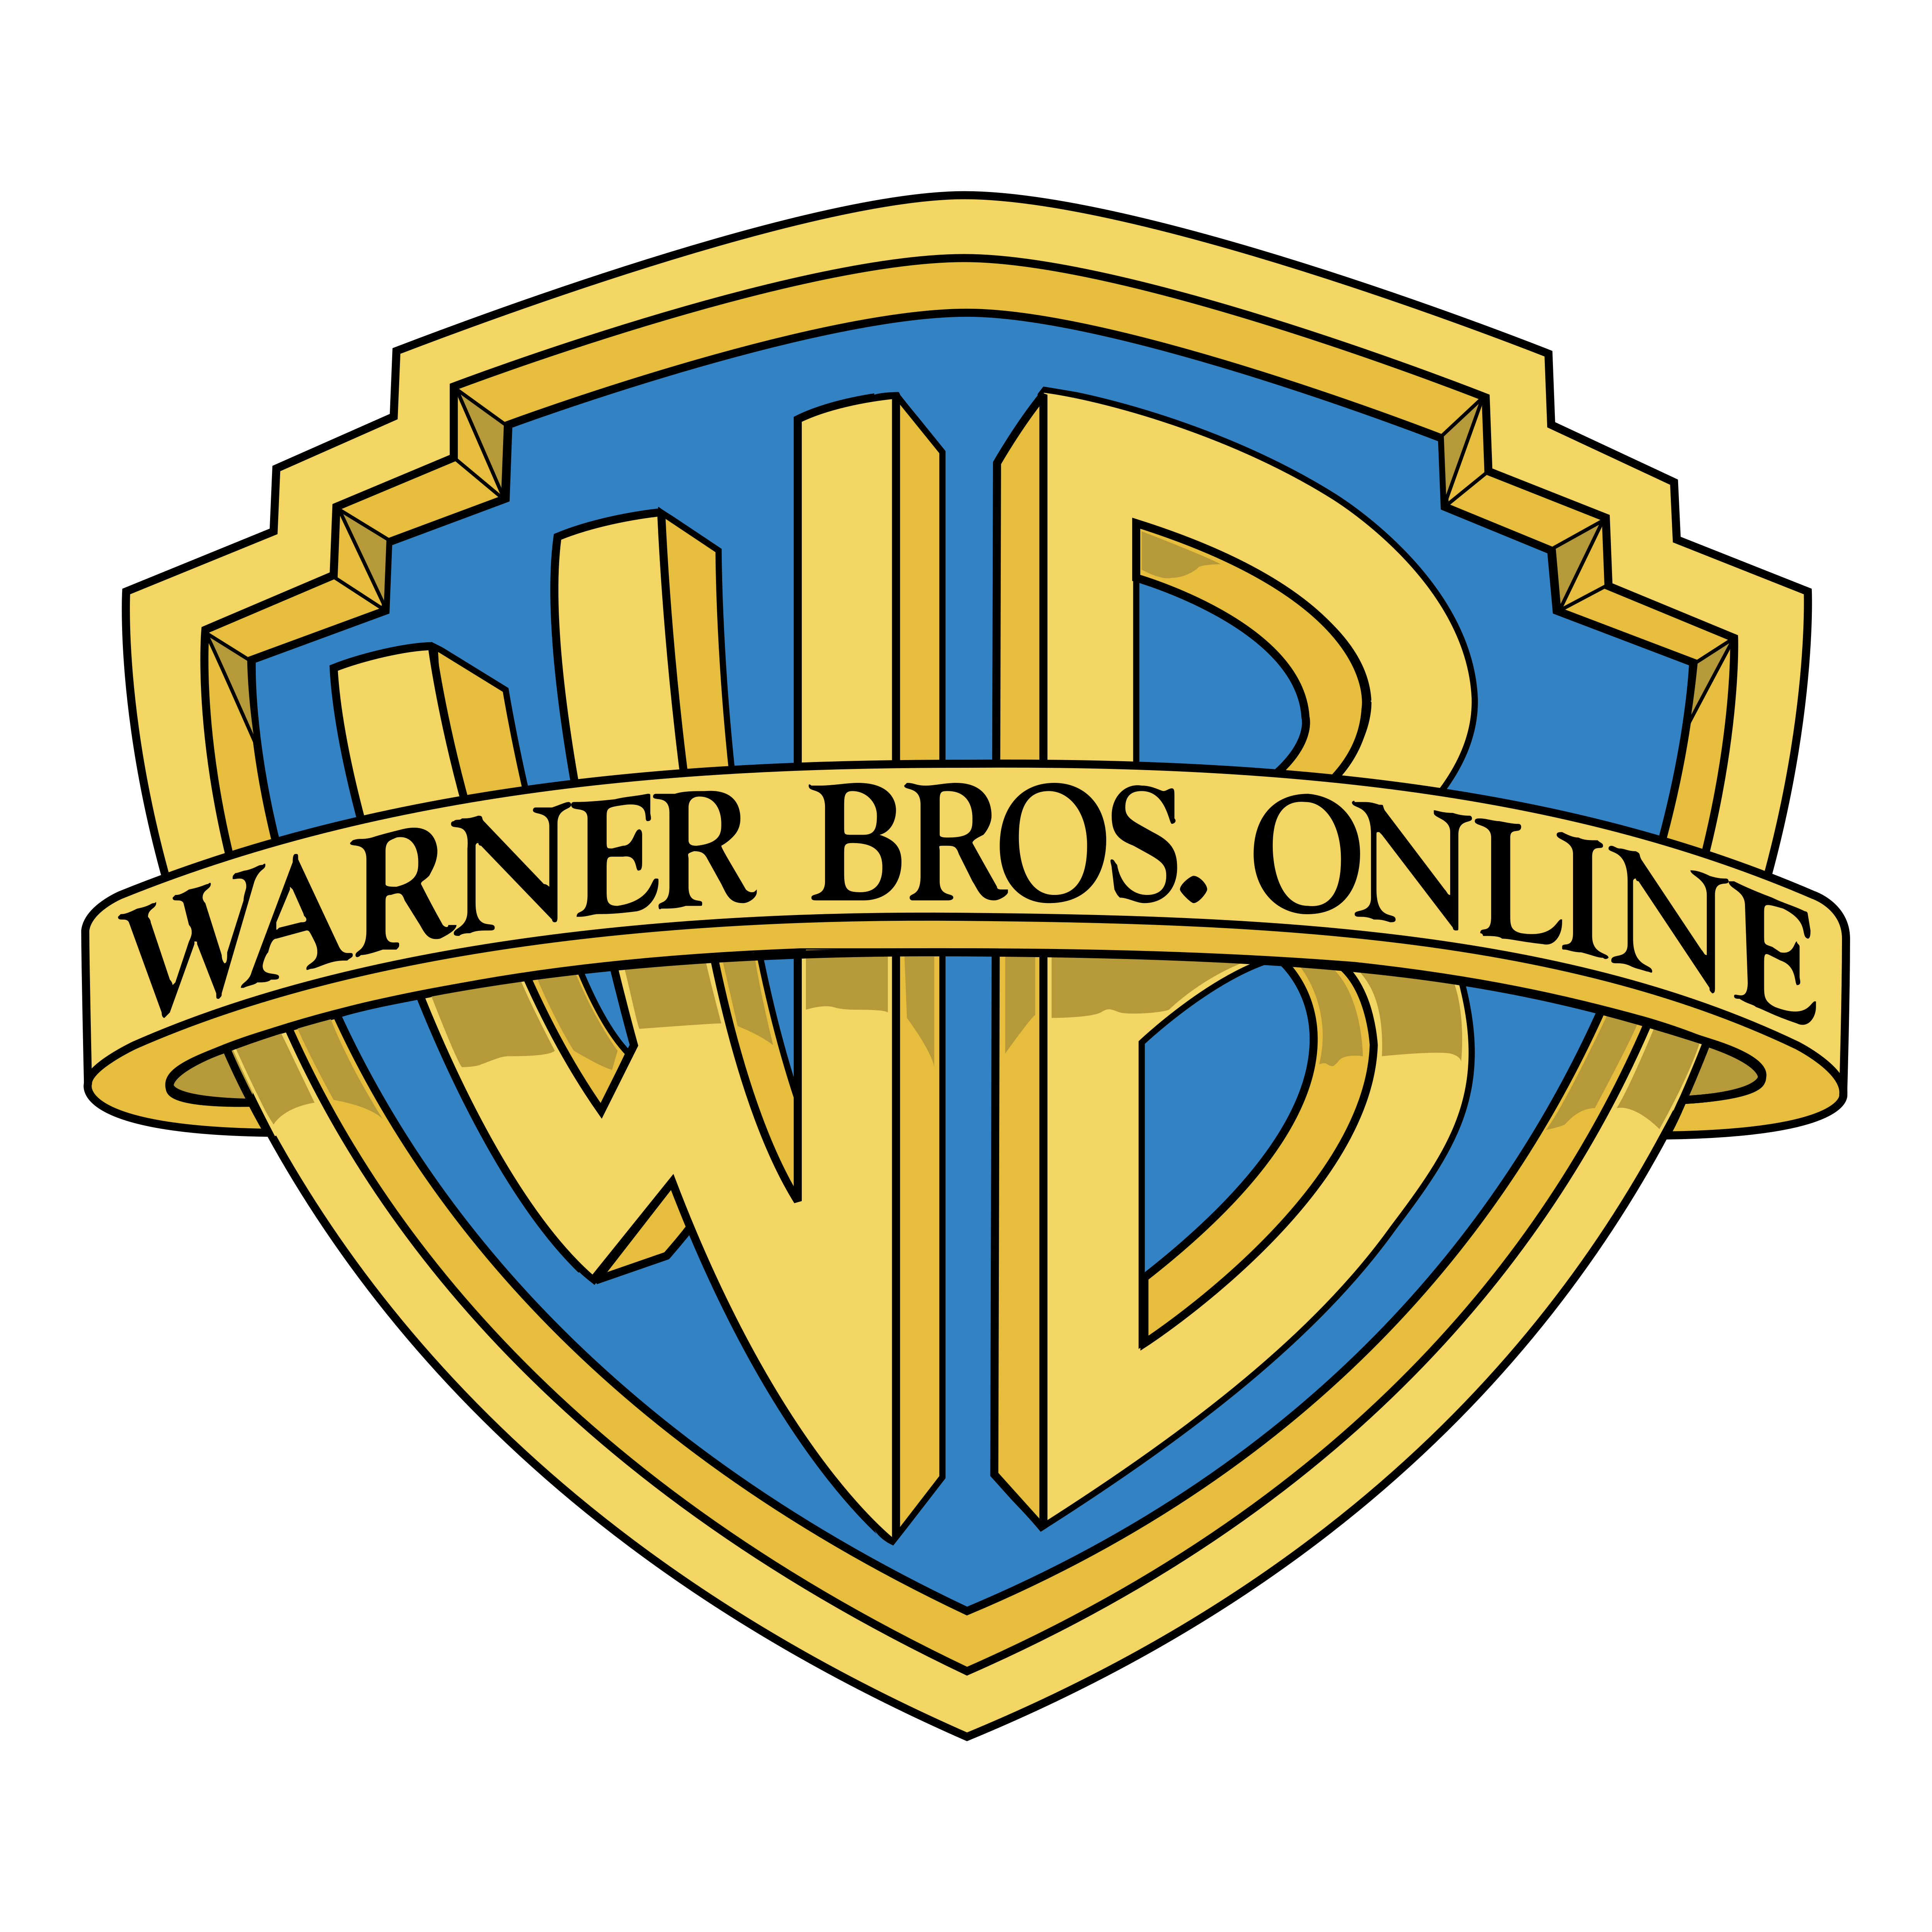 Варнер брос. Уорнер БРОС Пикчерз. WB логотип. Кинокомпания Warner Bros. Логотип ворнер БРОС.